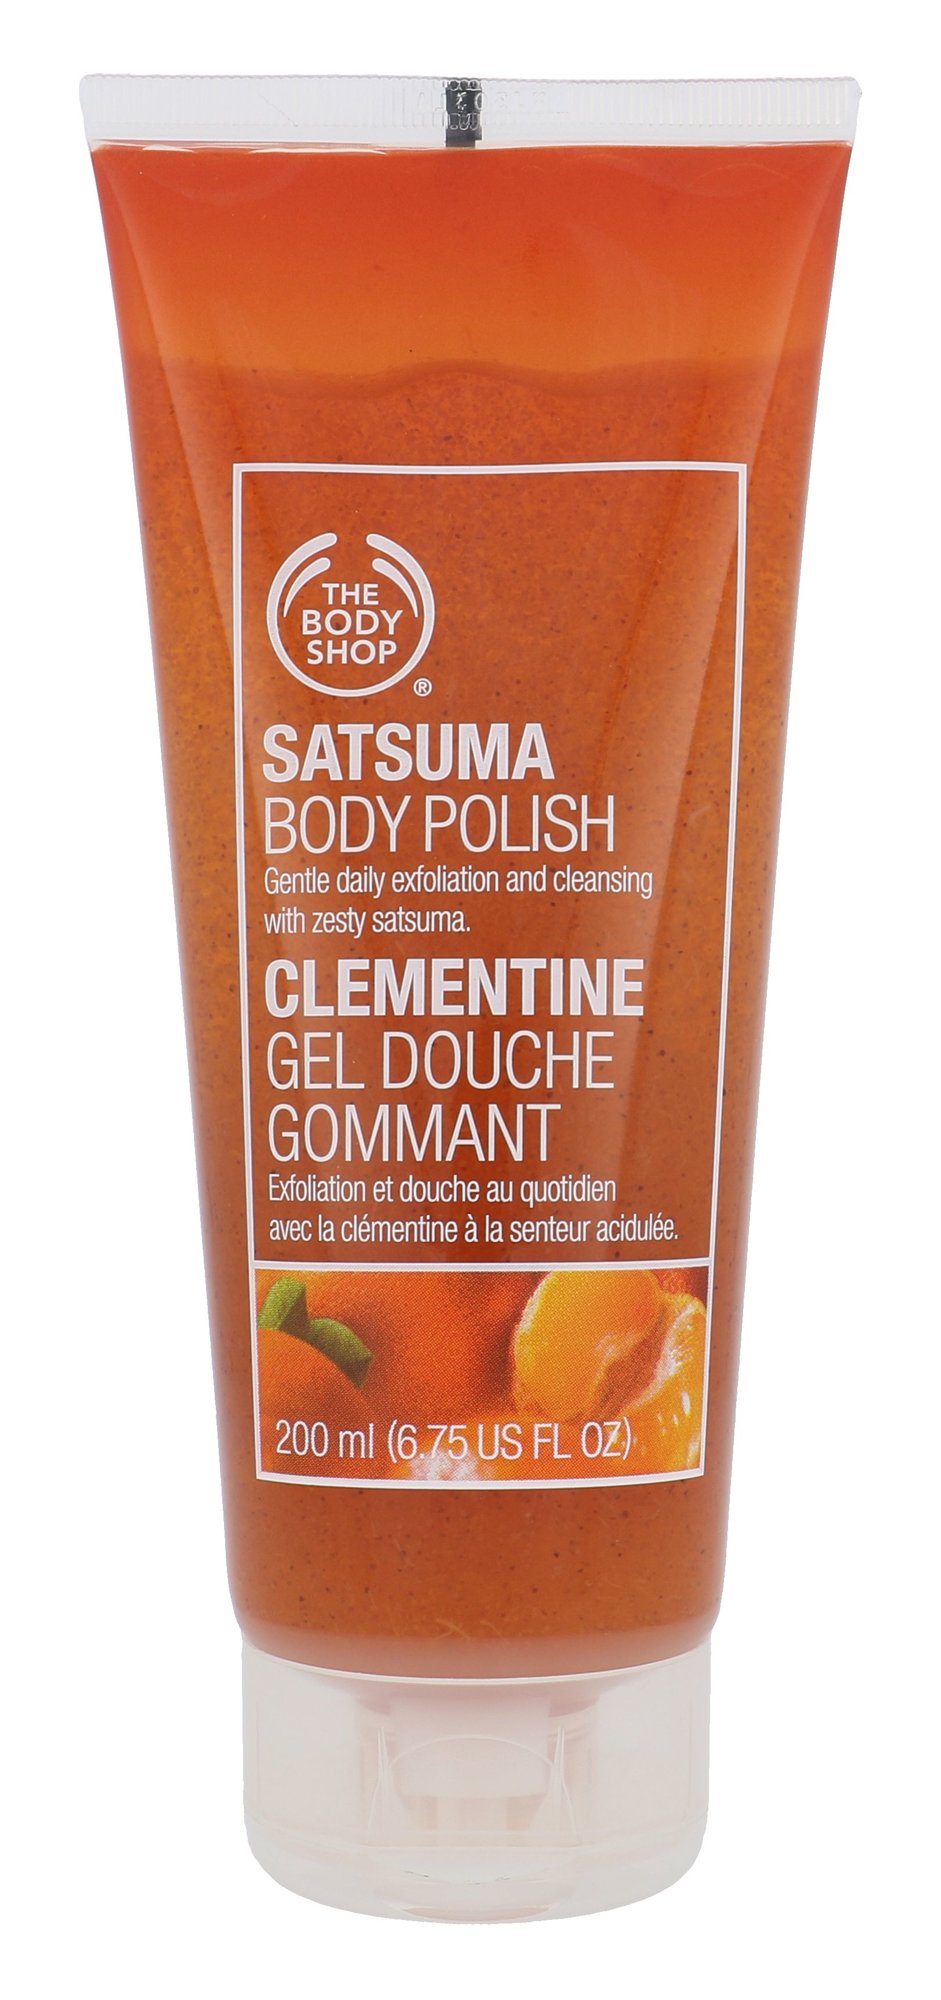 The Body Shop Satsuma Body Polish